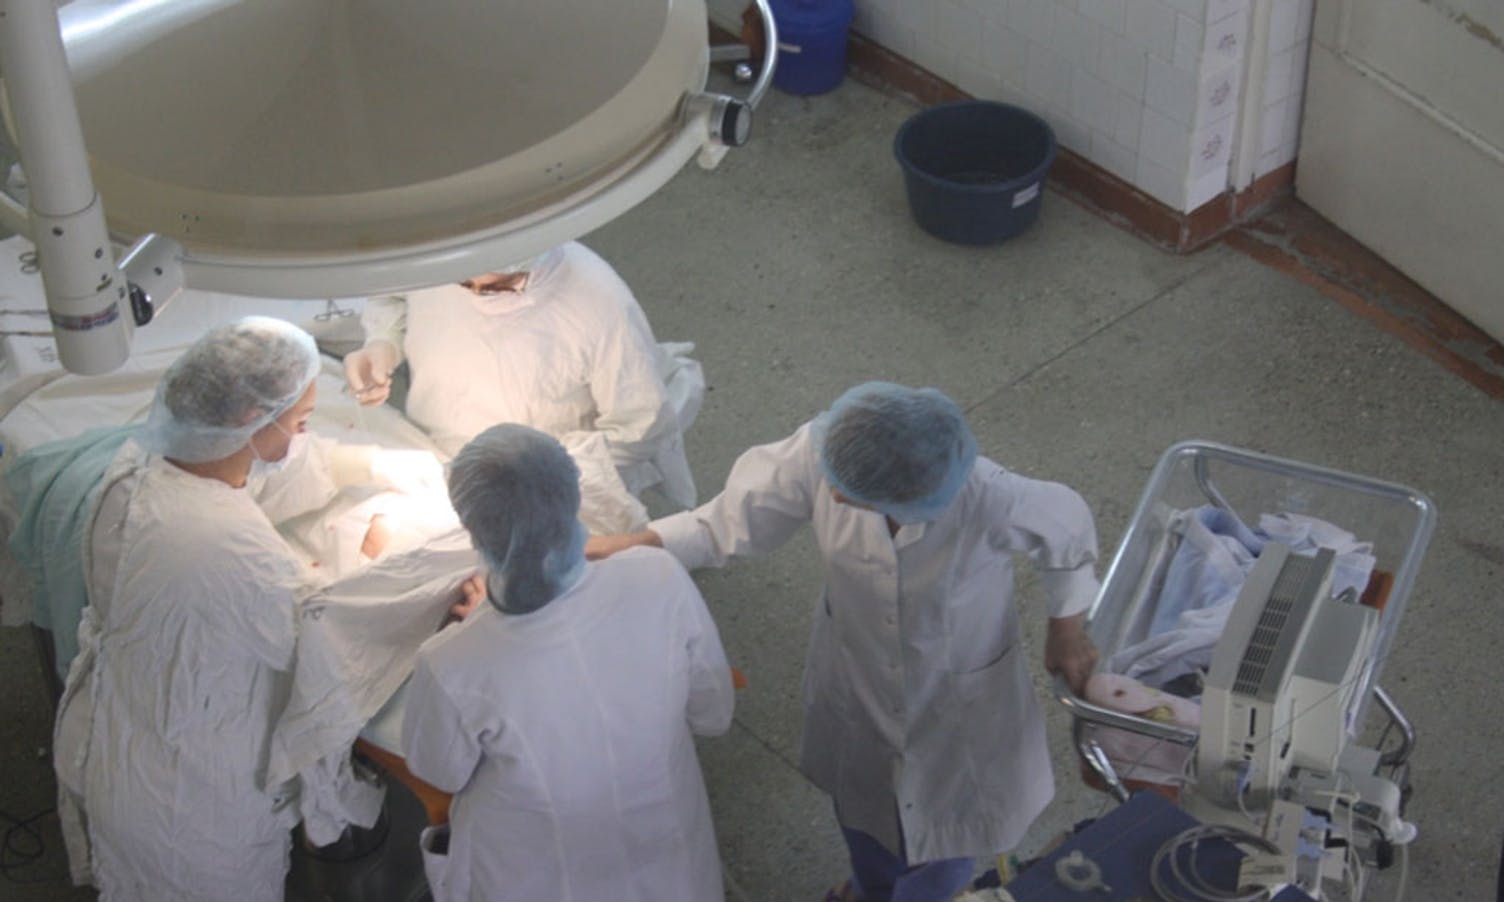 Legane trøysta neste baby i køen medan dei opererte.  (Privat foto)